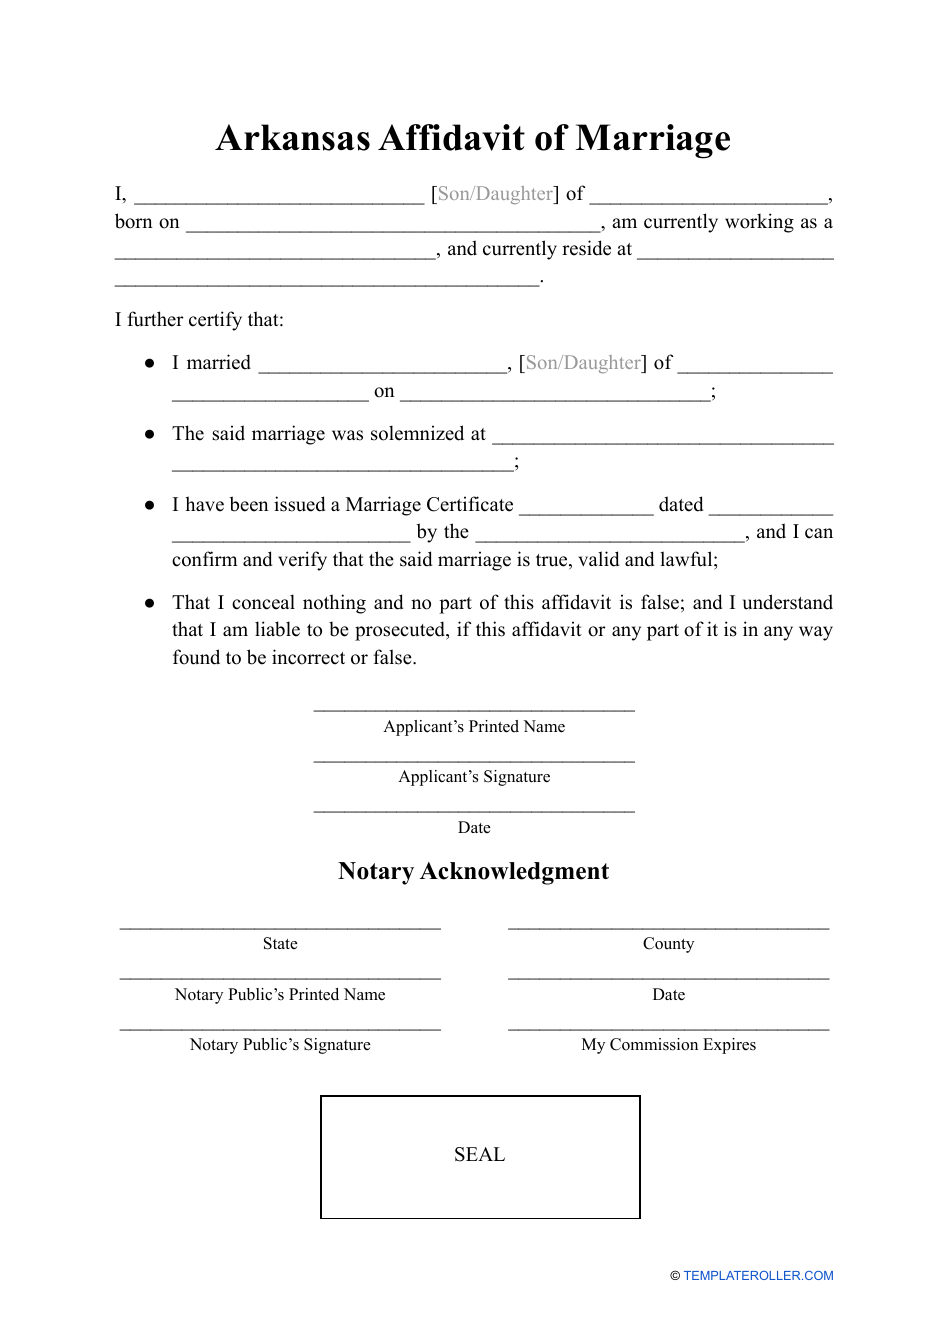 Affidavit of Marriage - Arkansas, Page 1